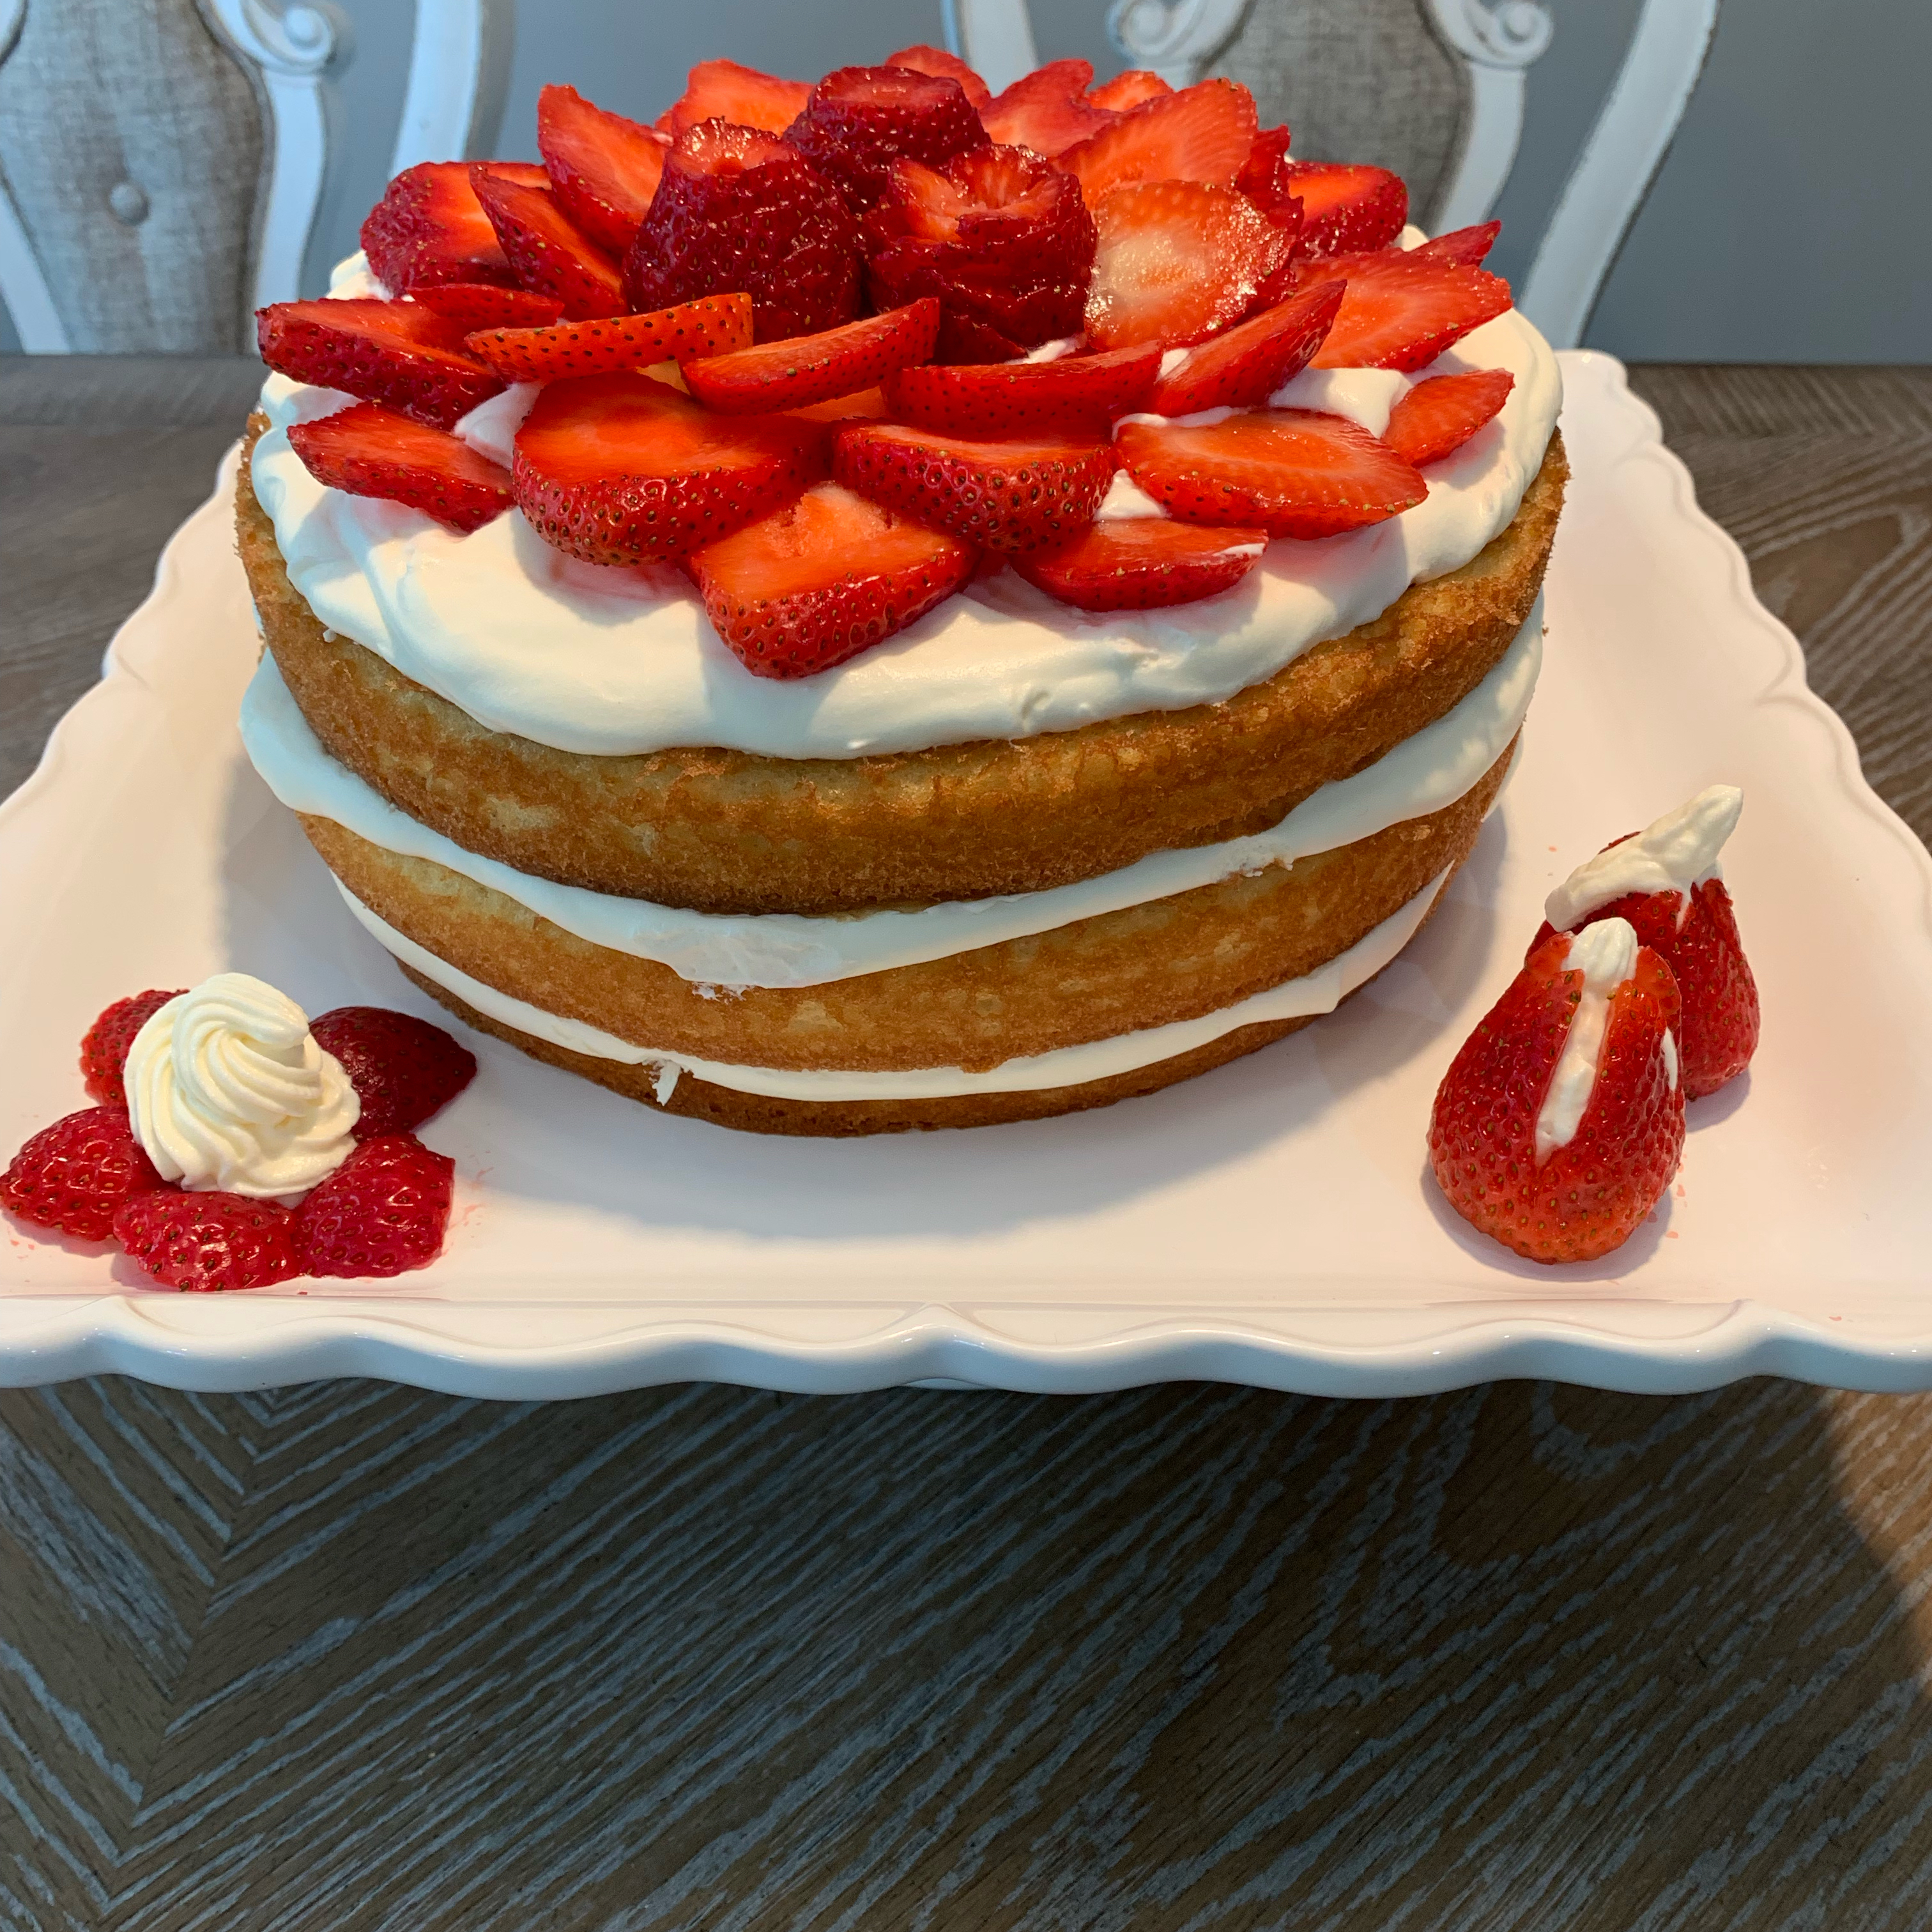 Strawberry Refrigerator Cake